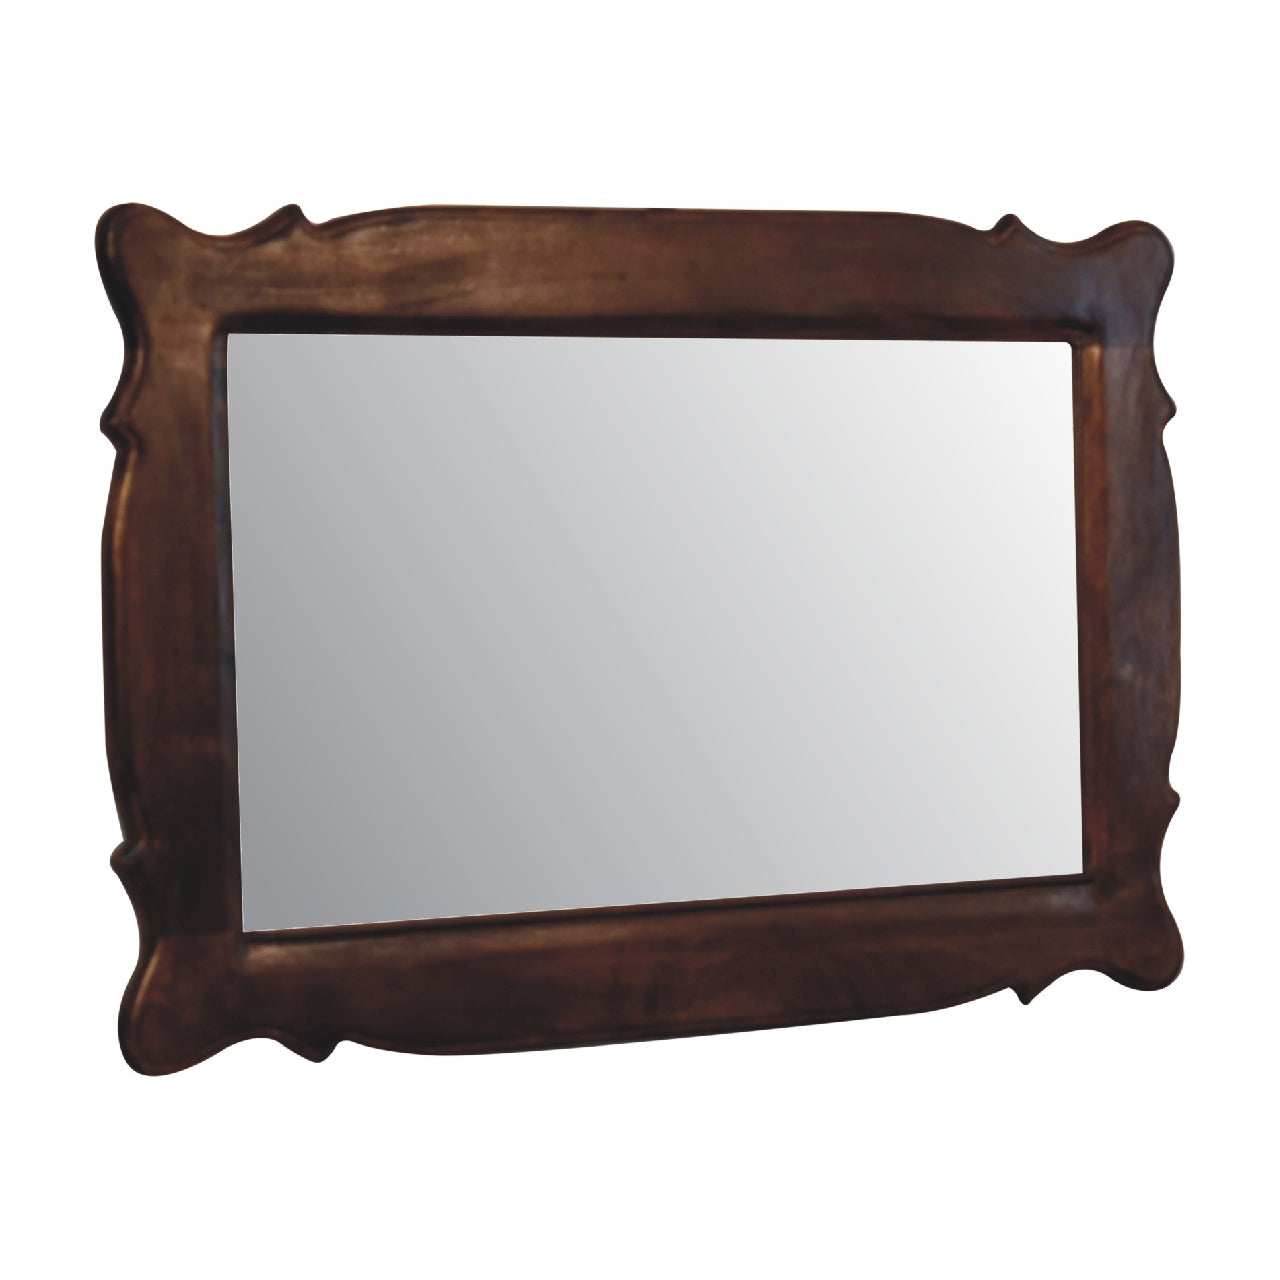 View Chestnut Oblong Mirror Frame information